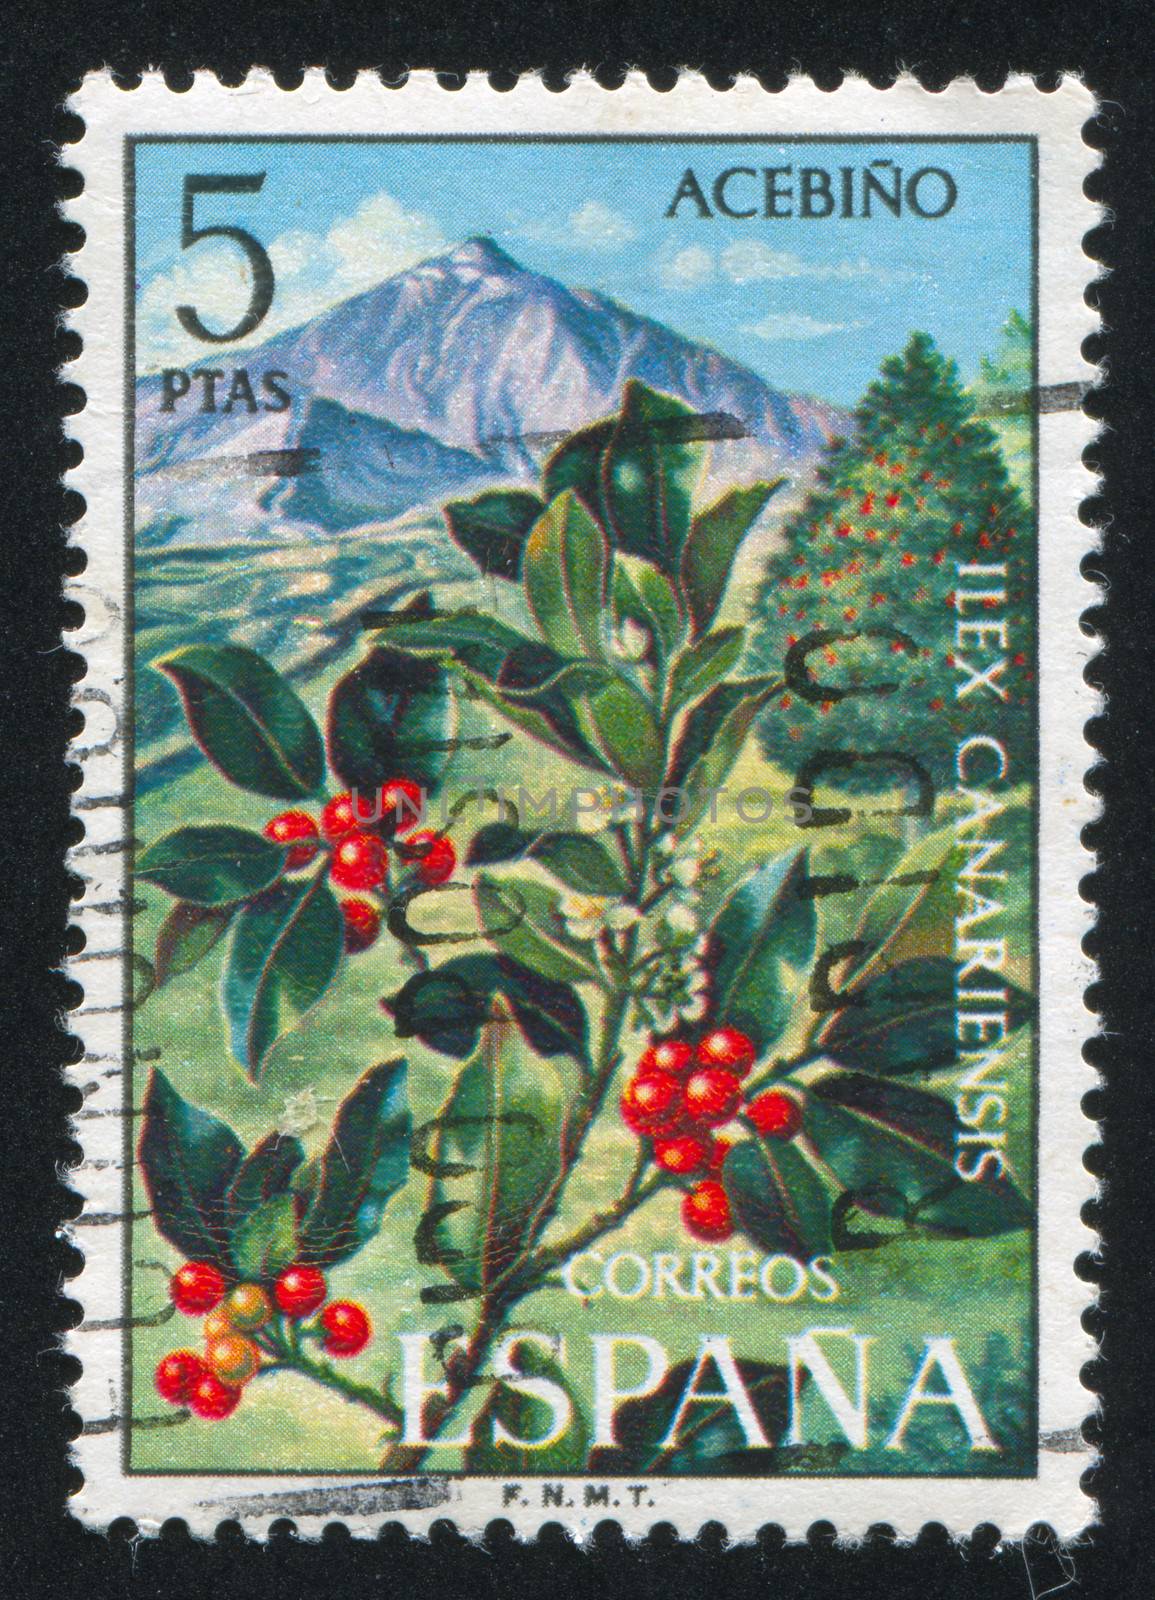 SPAIN - CIRCA 1973: stamp printed by Spain, shows Holly, circa 1973